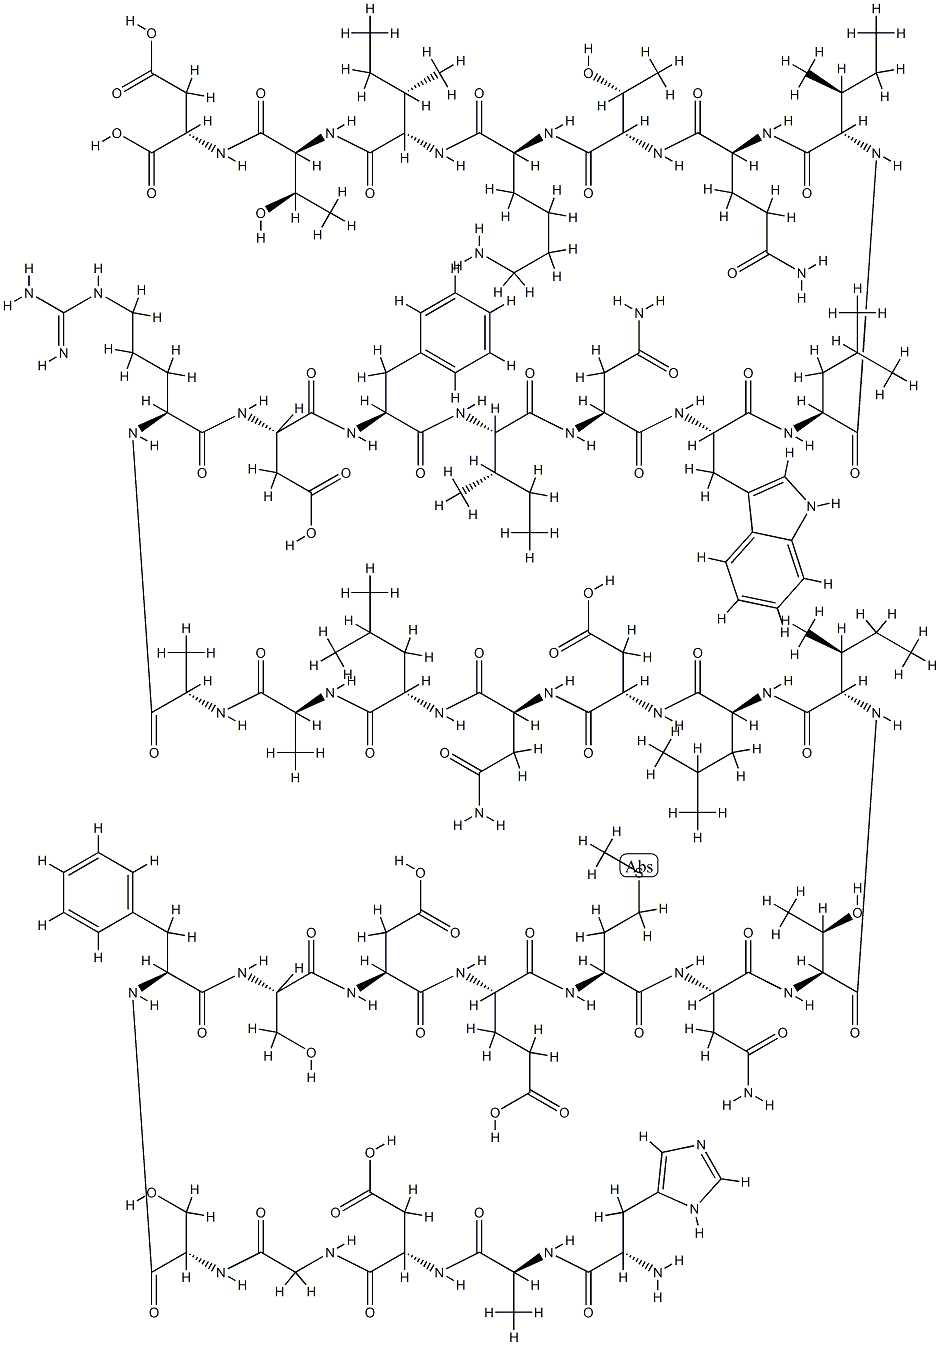 [Ala19]Glucagon-Like Peptide II, rat Structure